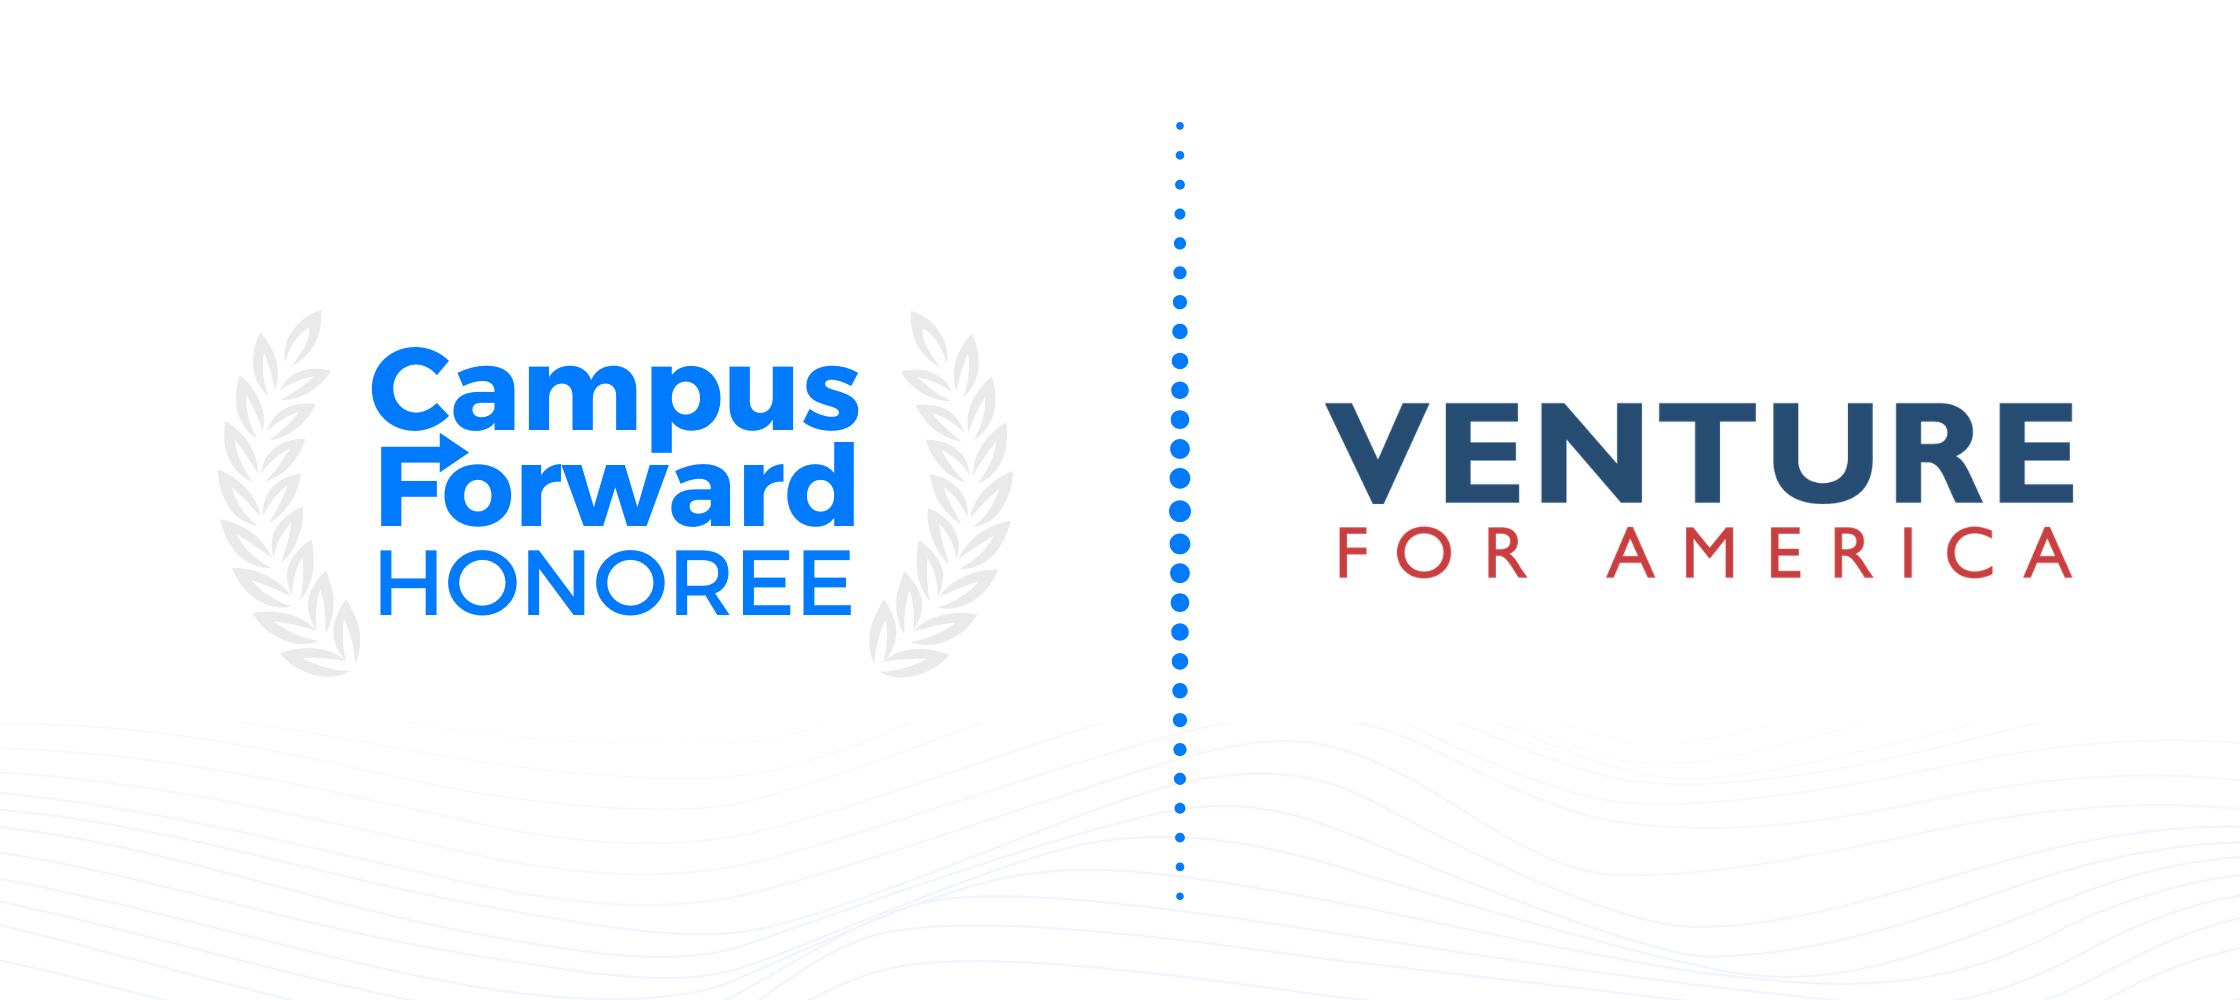 Campus Forward Honoree - Venture For America